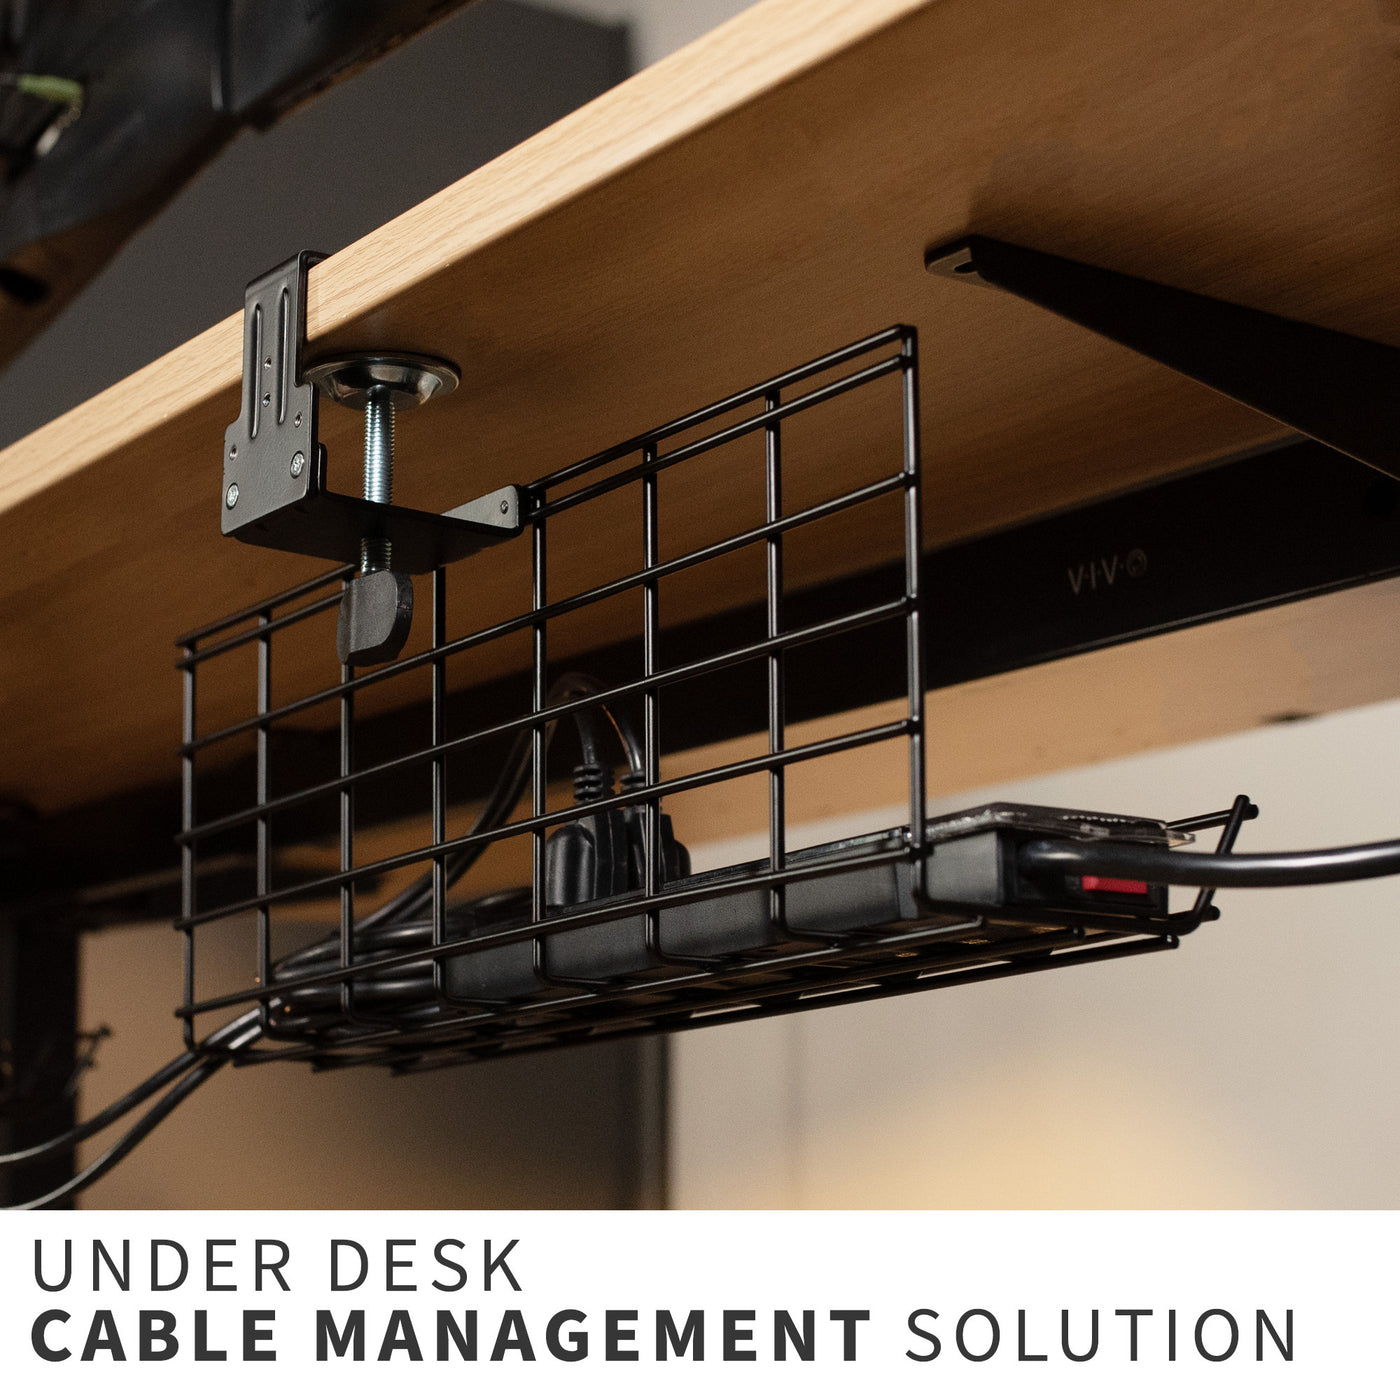 Under desk clamp-on cable management organizer hanging racks.